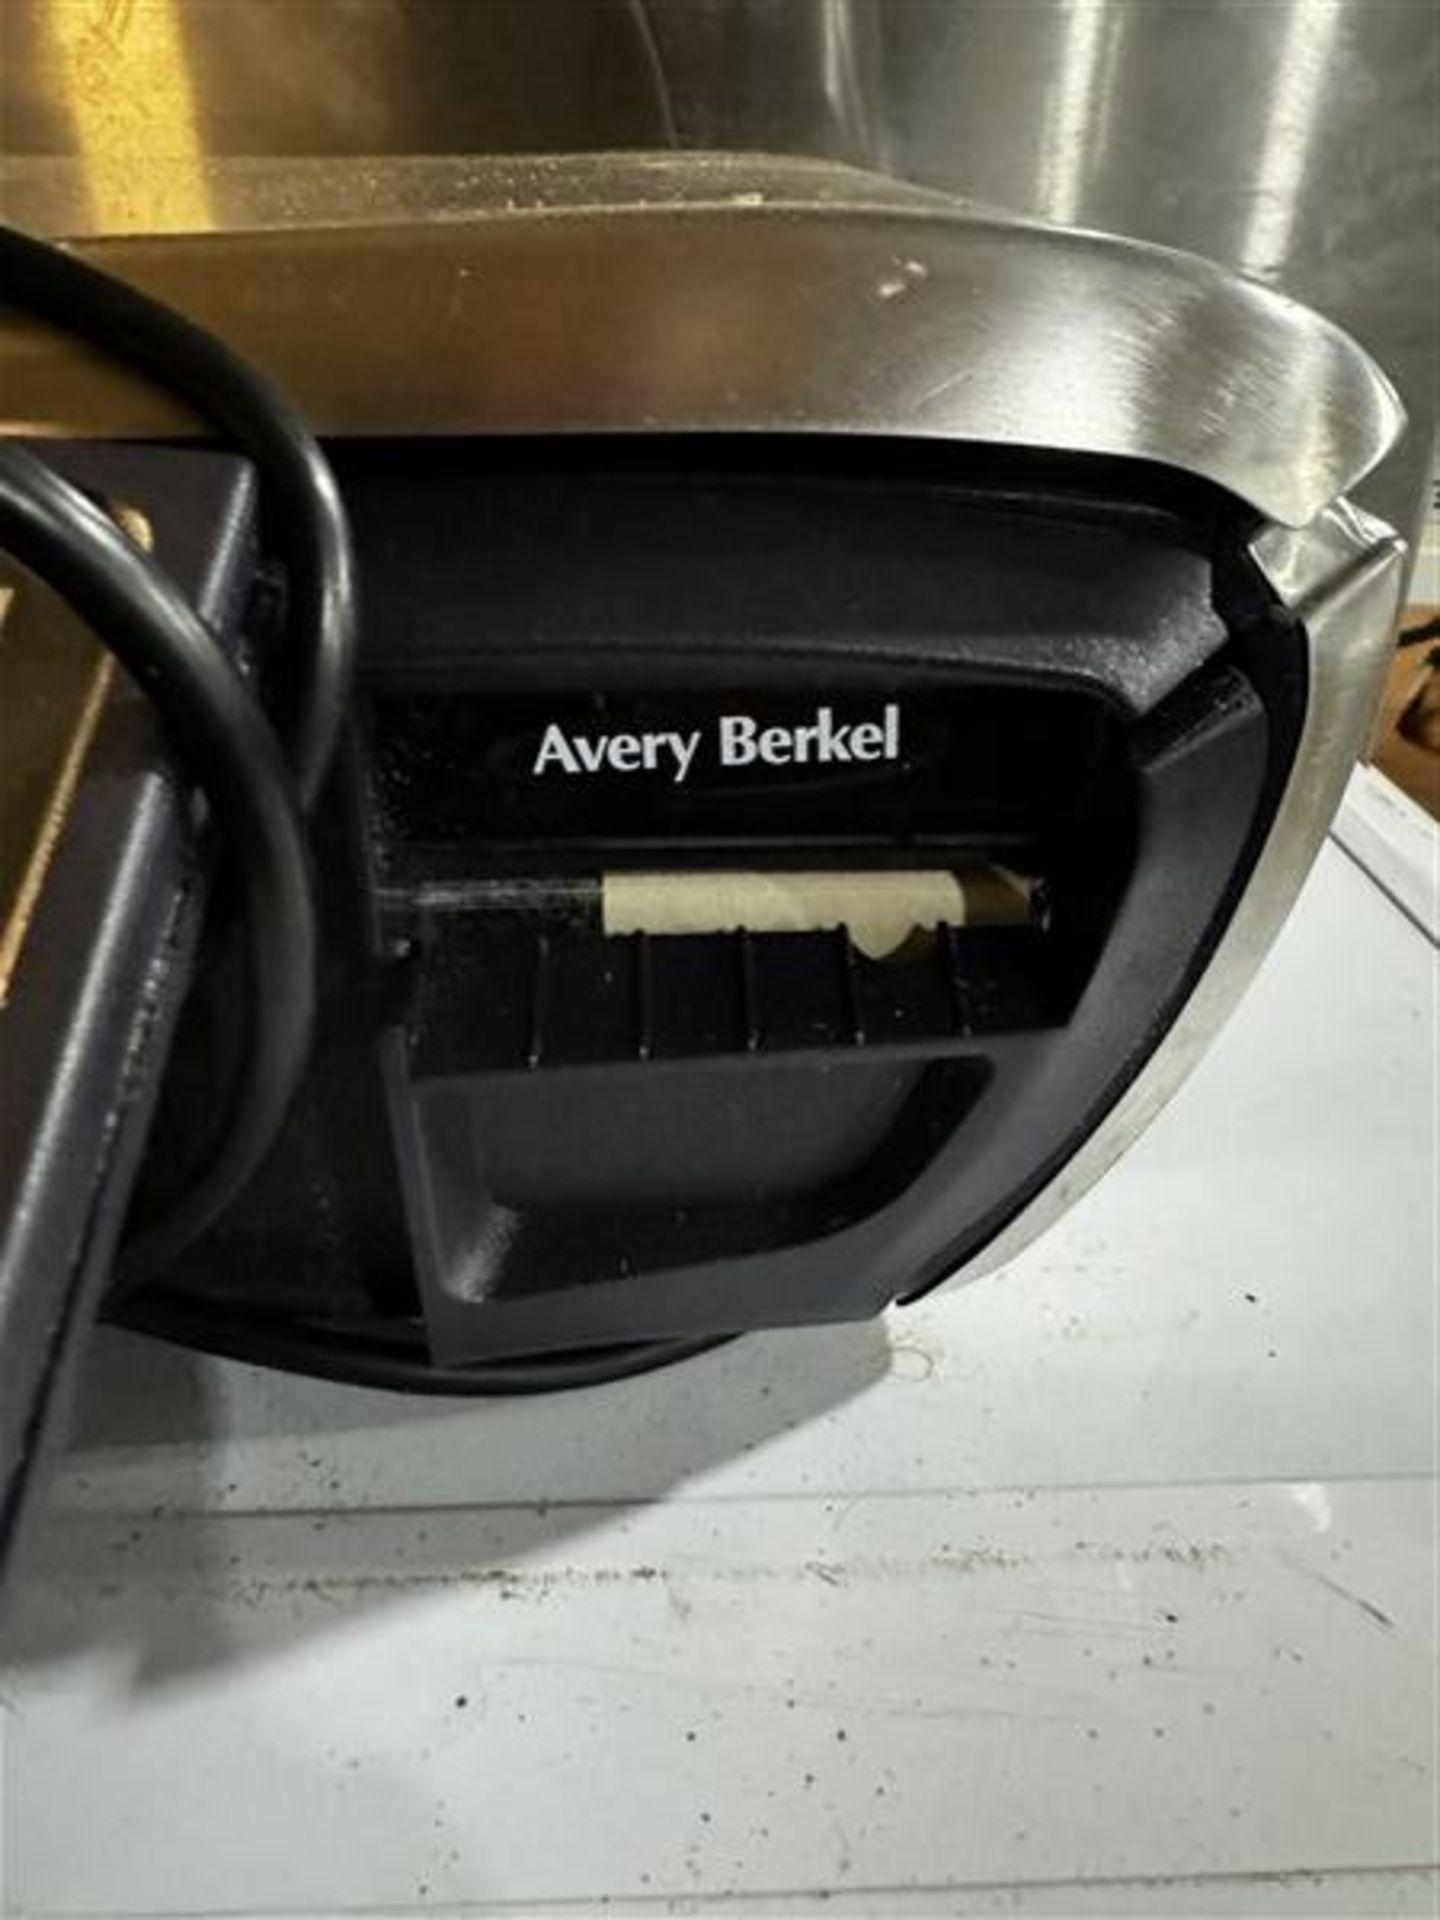 Avery Berkel digital scales with labeller - Image 3 of 4